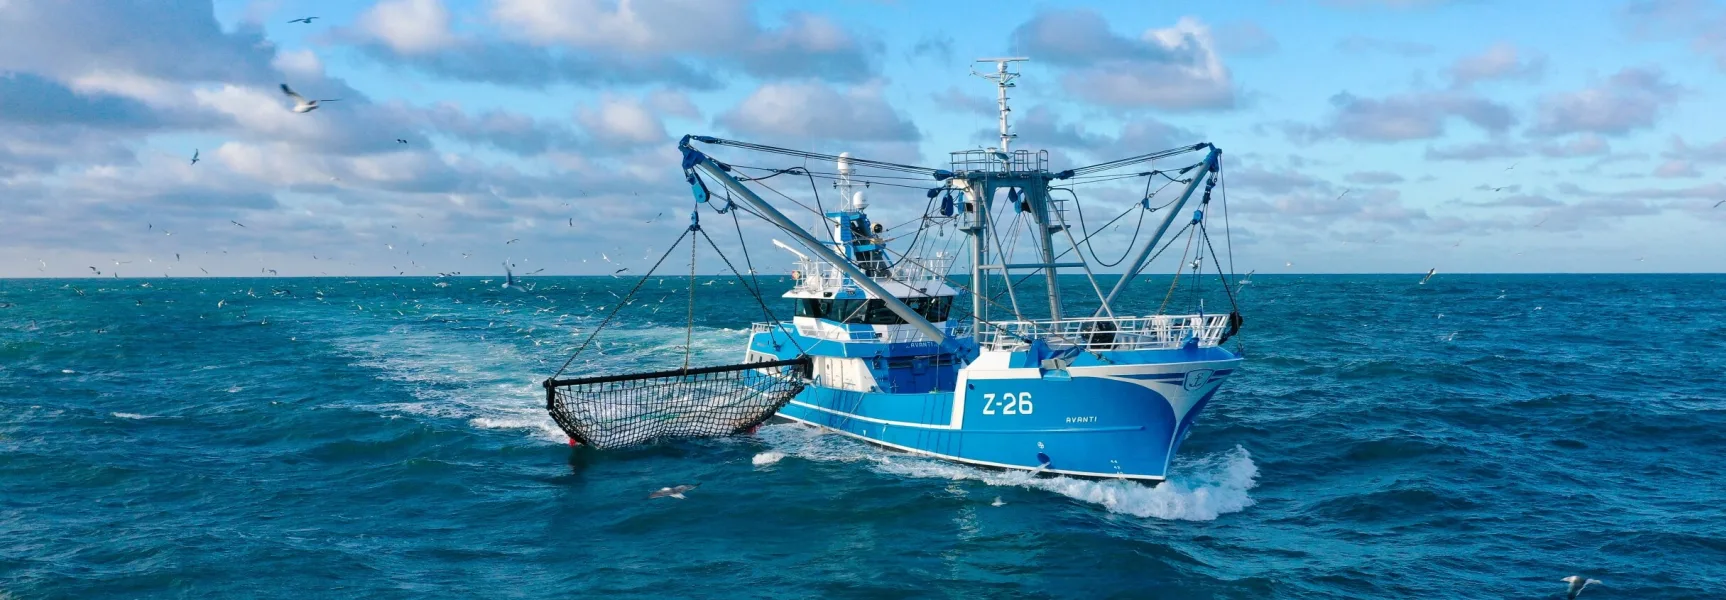 eBlue_economy_Damen Maaskant delivers Beam Trawler Avanti to Belgian fishing fleet.webp